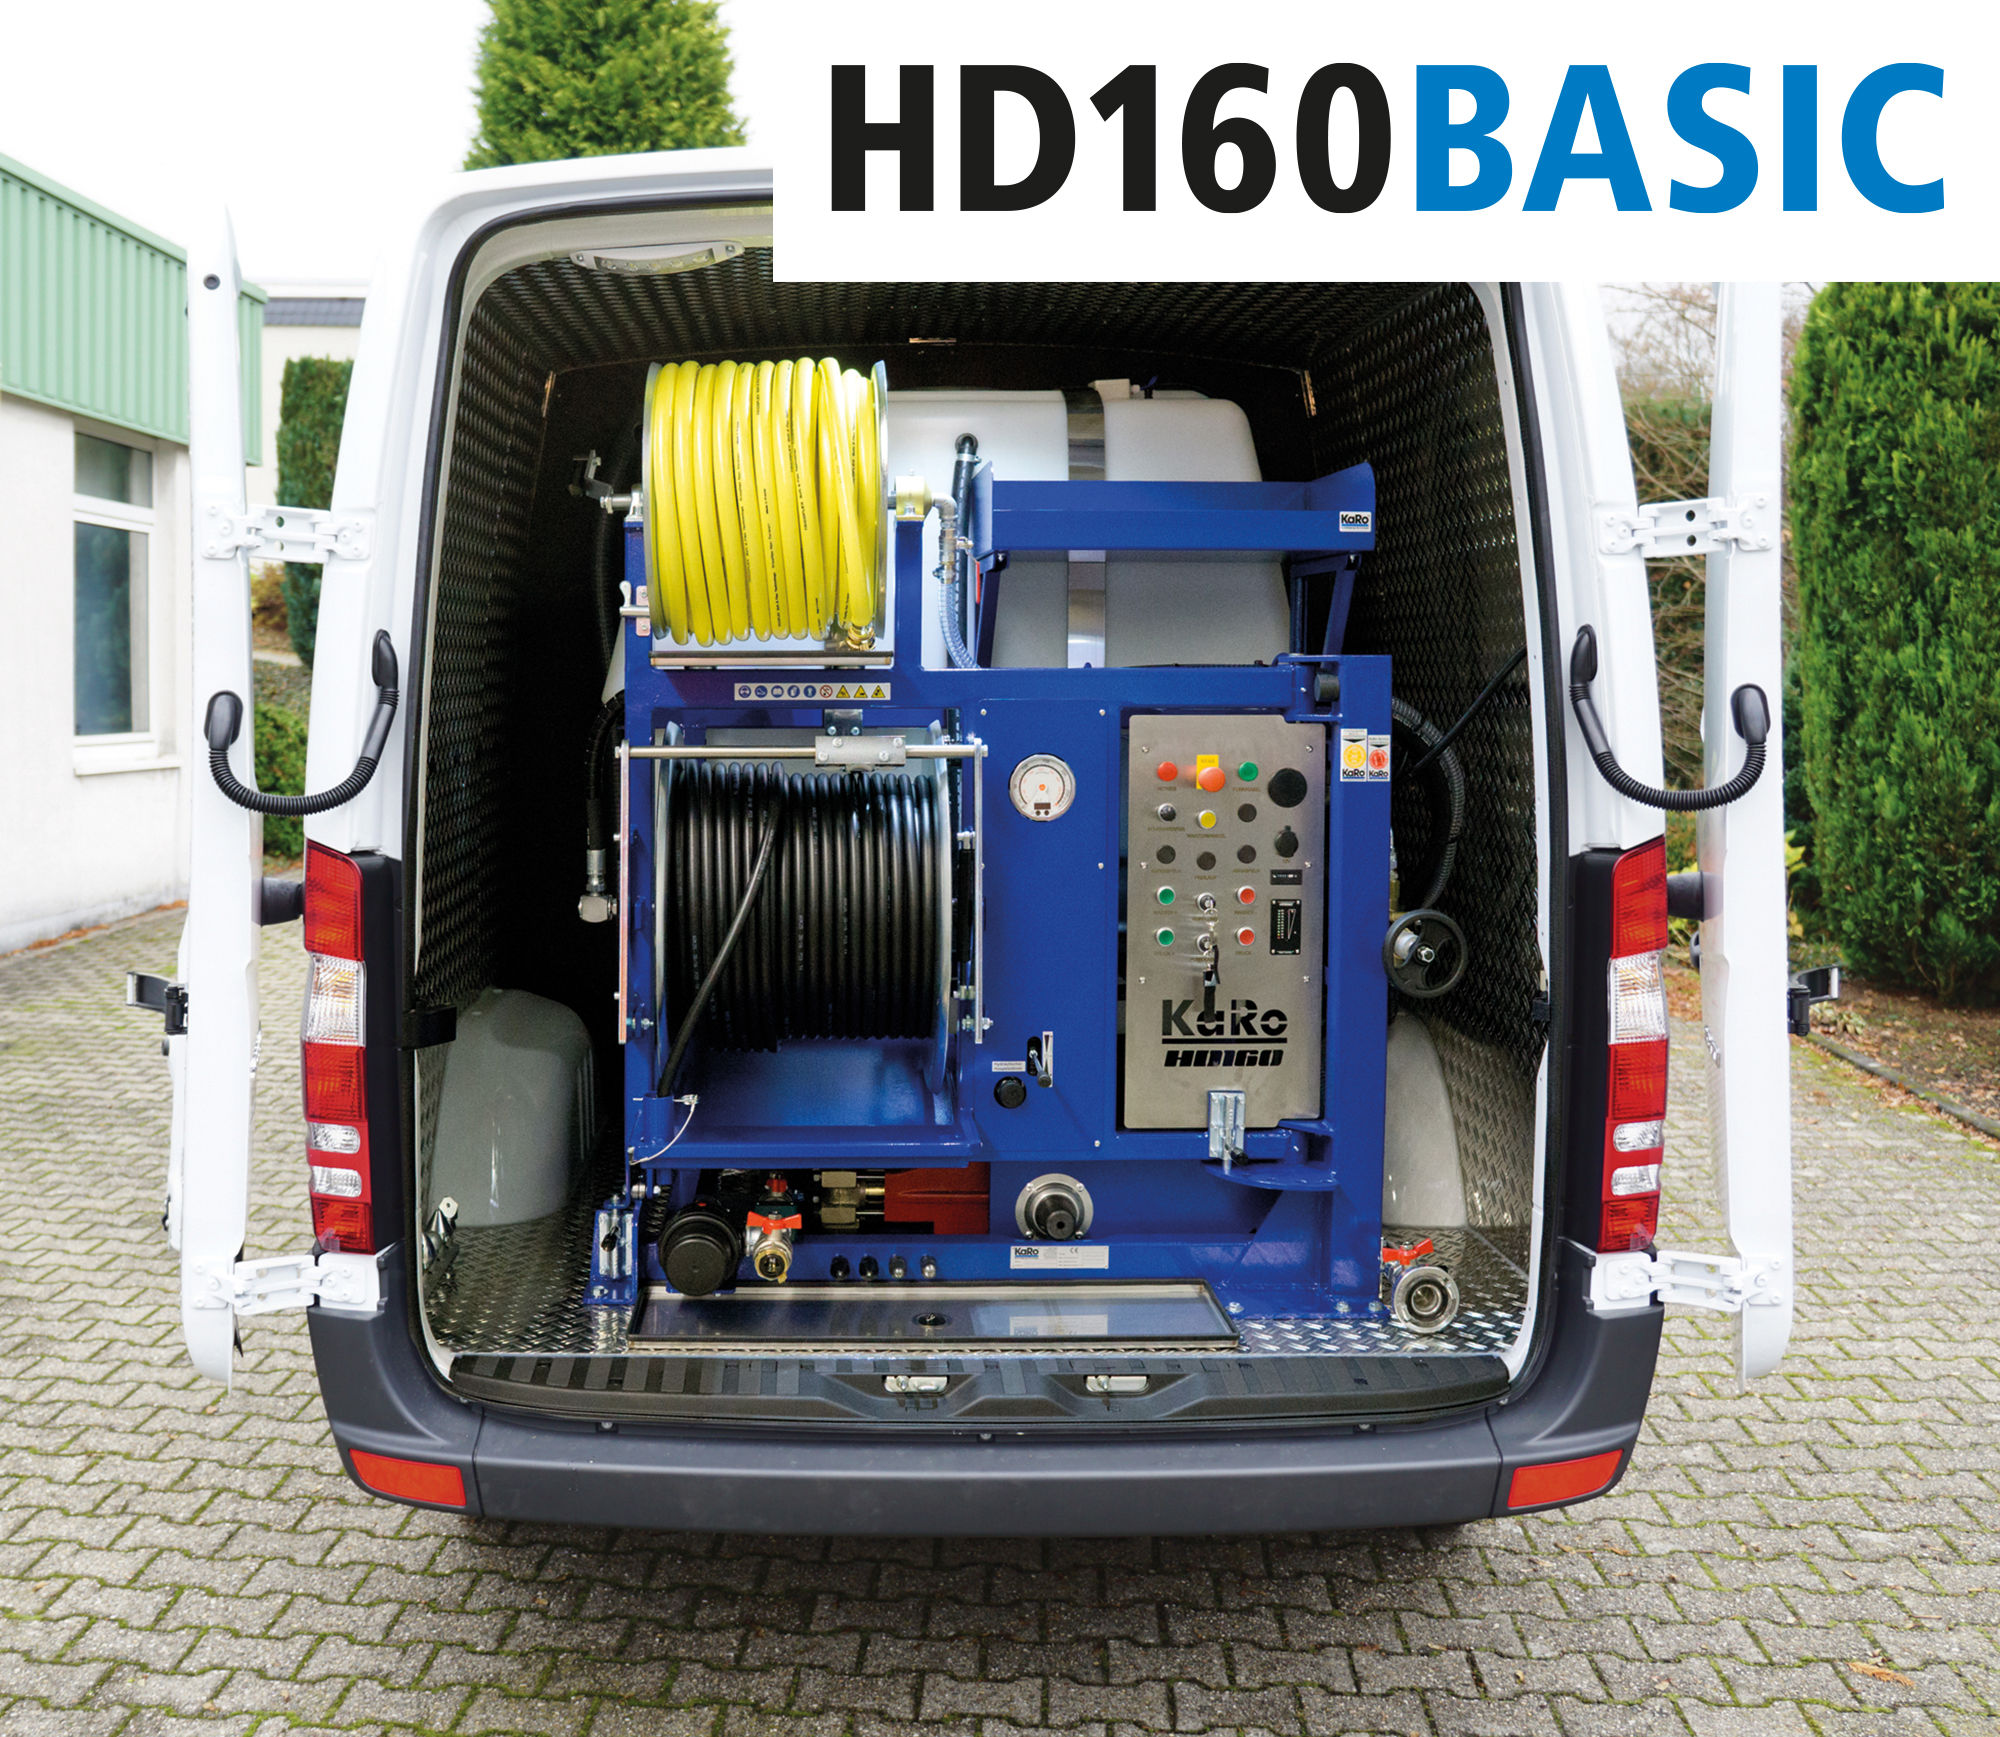 HD160 Basic